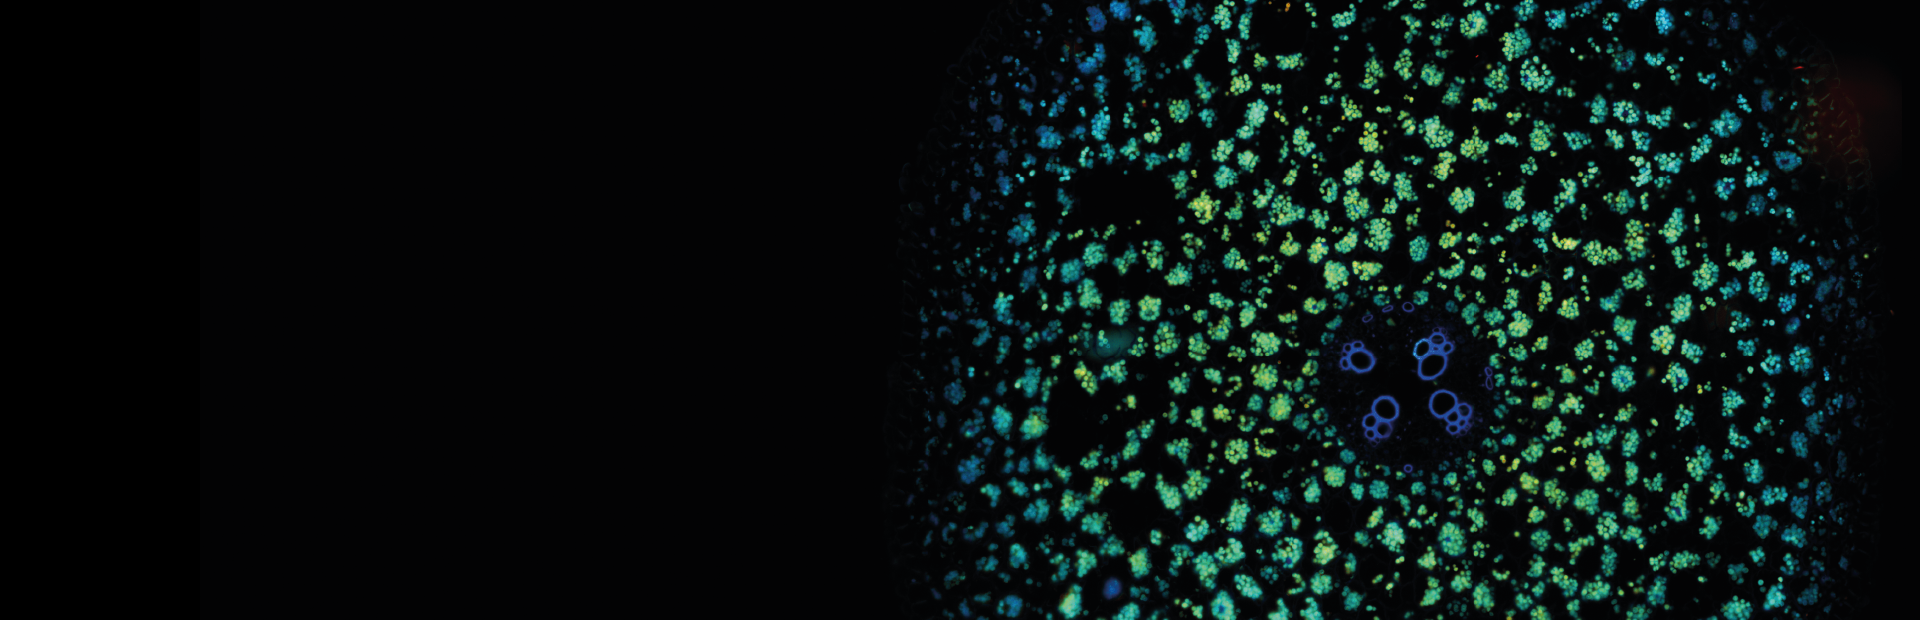 Understanding Fluorescence Lifetime Imaging Microscopy (FLIM)